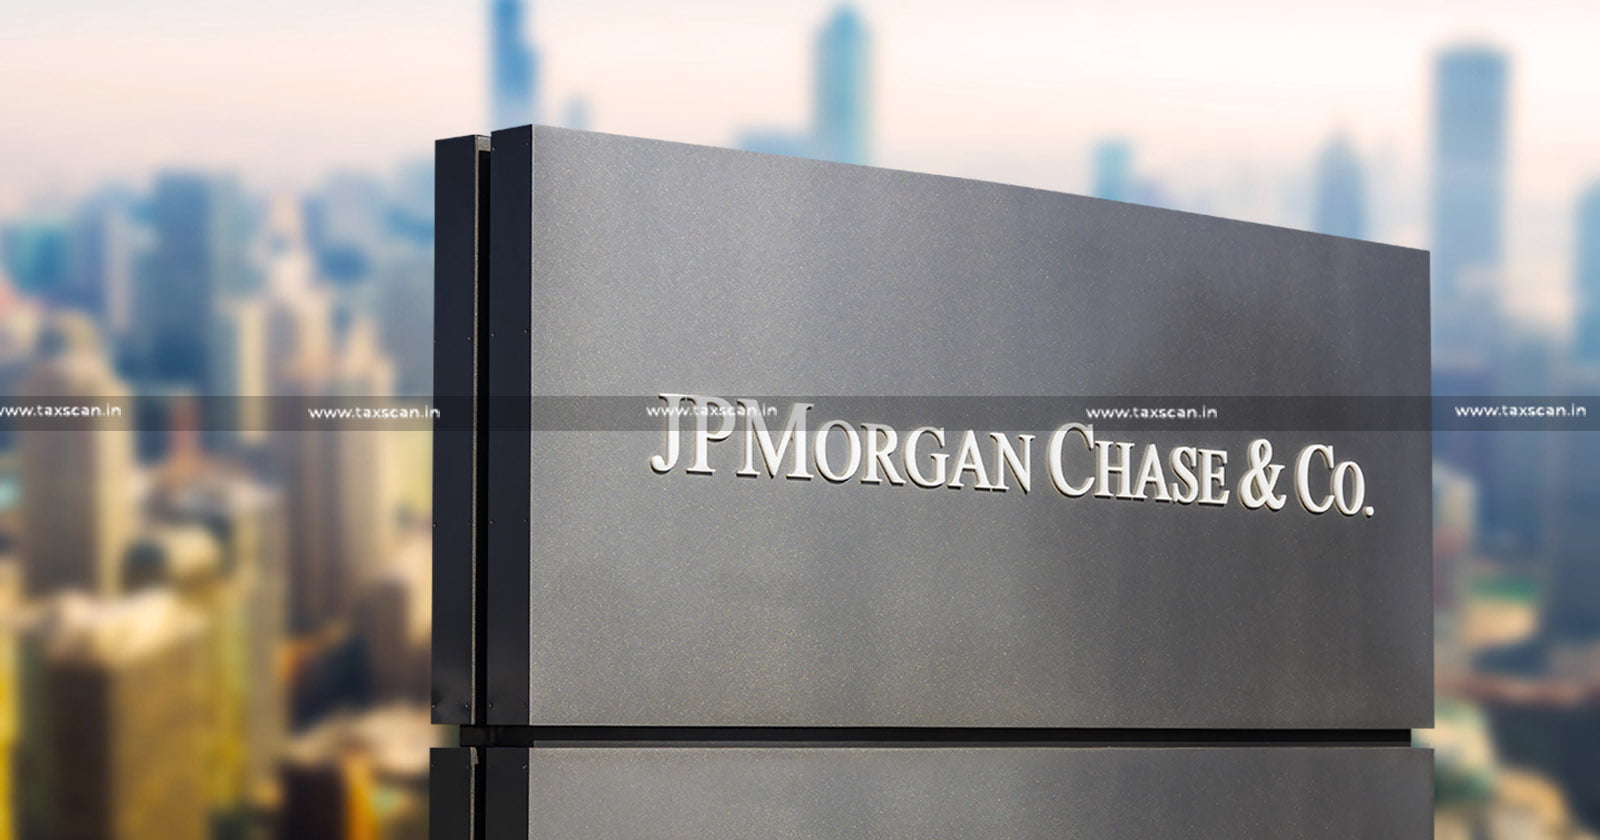 MBA vacncy in jpmorgan chase & co - CA vacancy in JPMorgan Chase & Co - Financial Analysis in JPMorgan Chase & Co - MBA vacancy in mumbai - taxscan